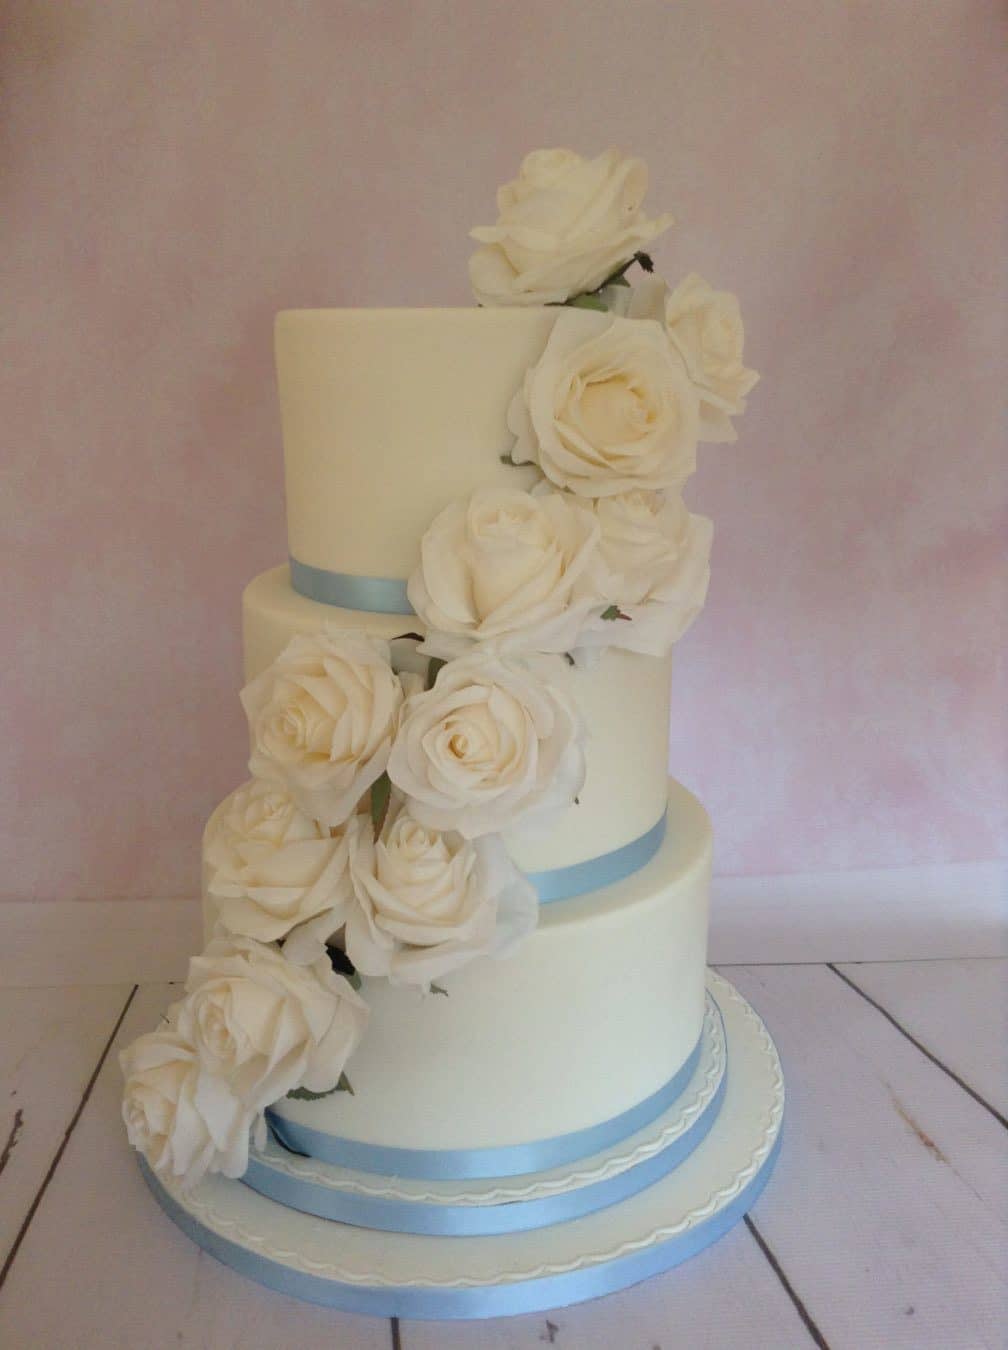 scottish-edinburgh-wedding-cakes-the-little-cake-house-blue-ribbon-sugar-flower